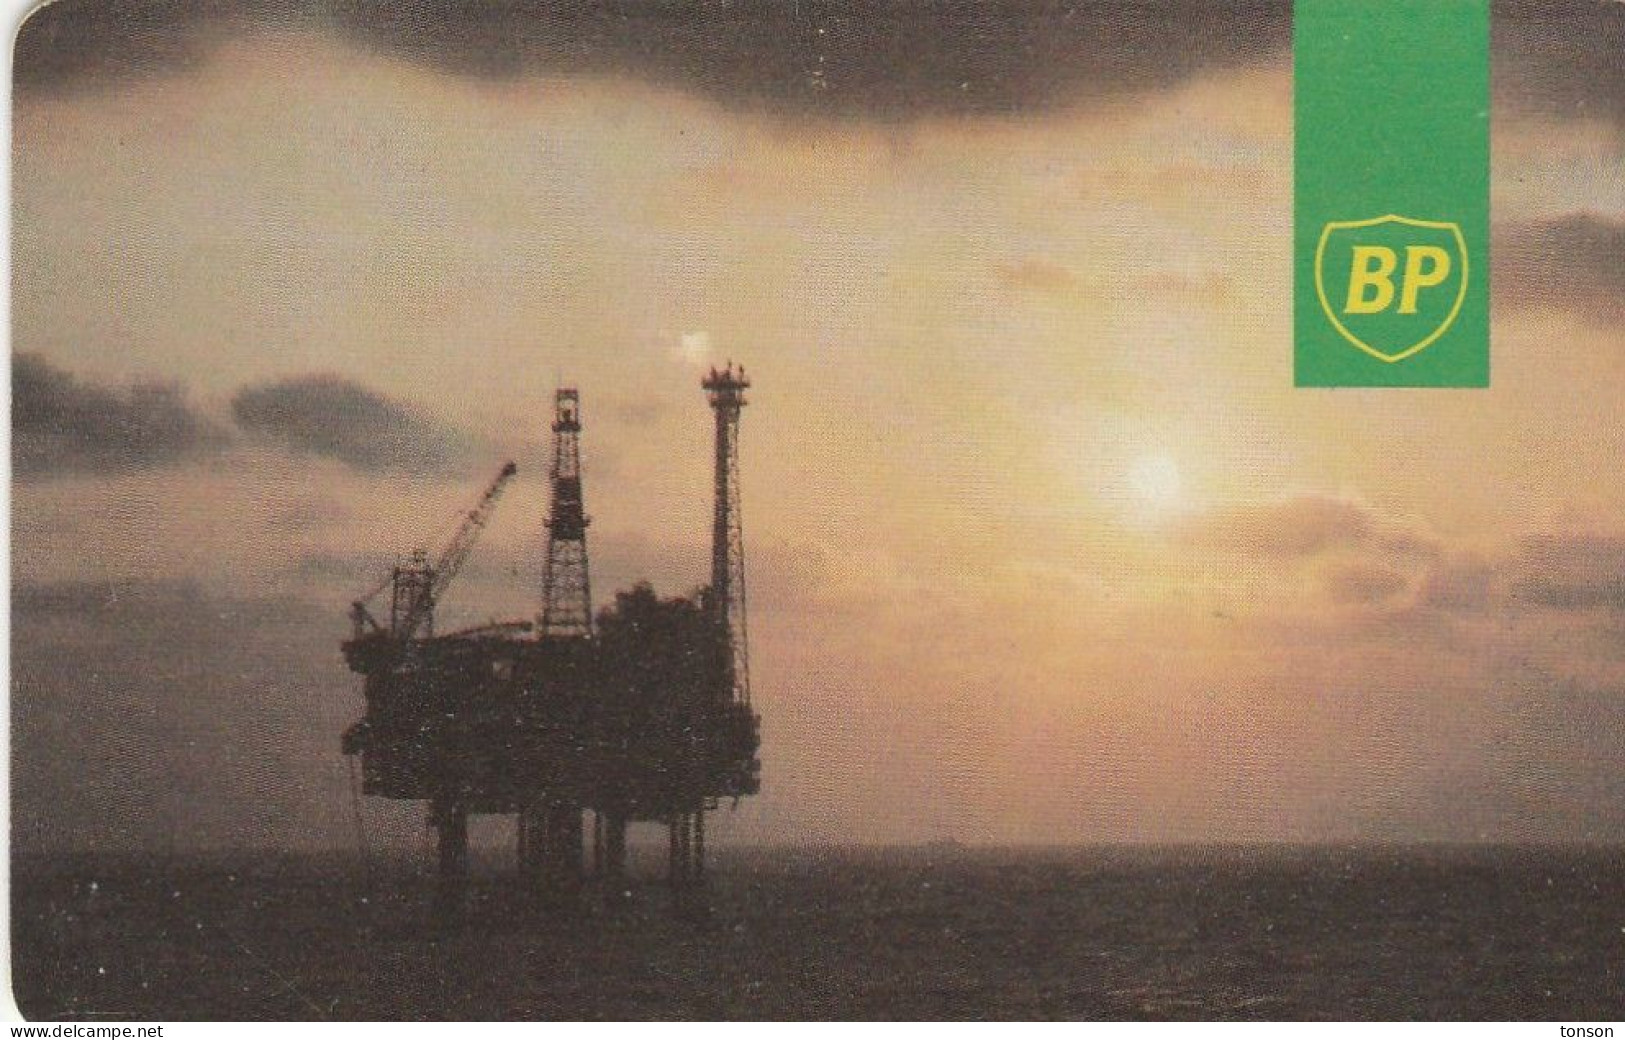 UK Oil Rig Phonecard - BP, GB-OIL-AUT-0001, BP (Blue IPL Logo), 20 Units, 2 Scans. - Piattaforme Petrolifere